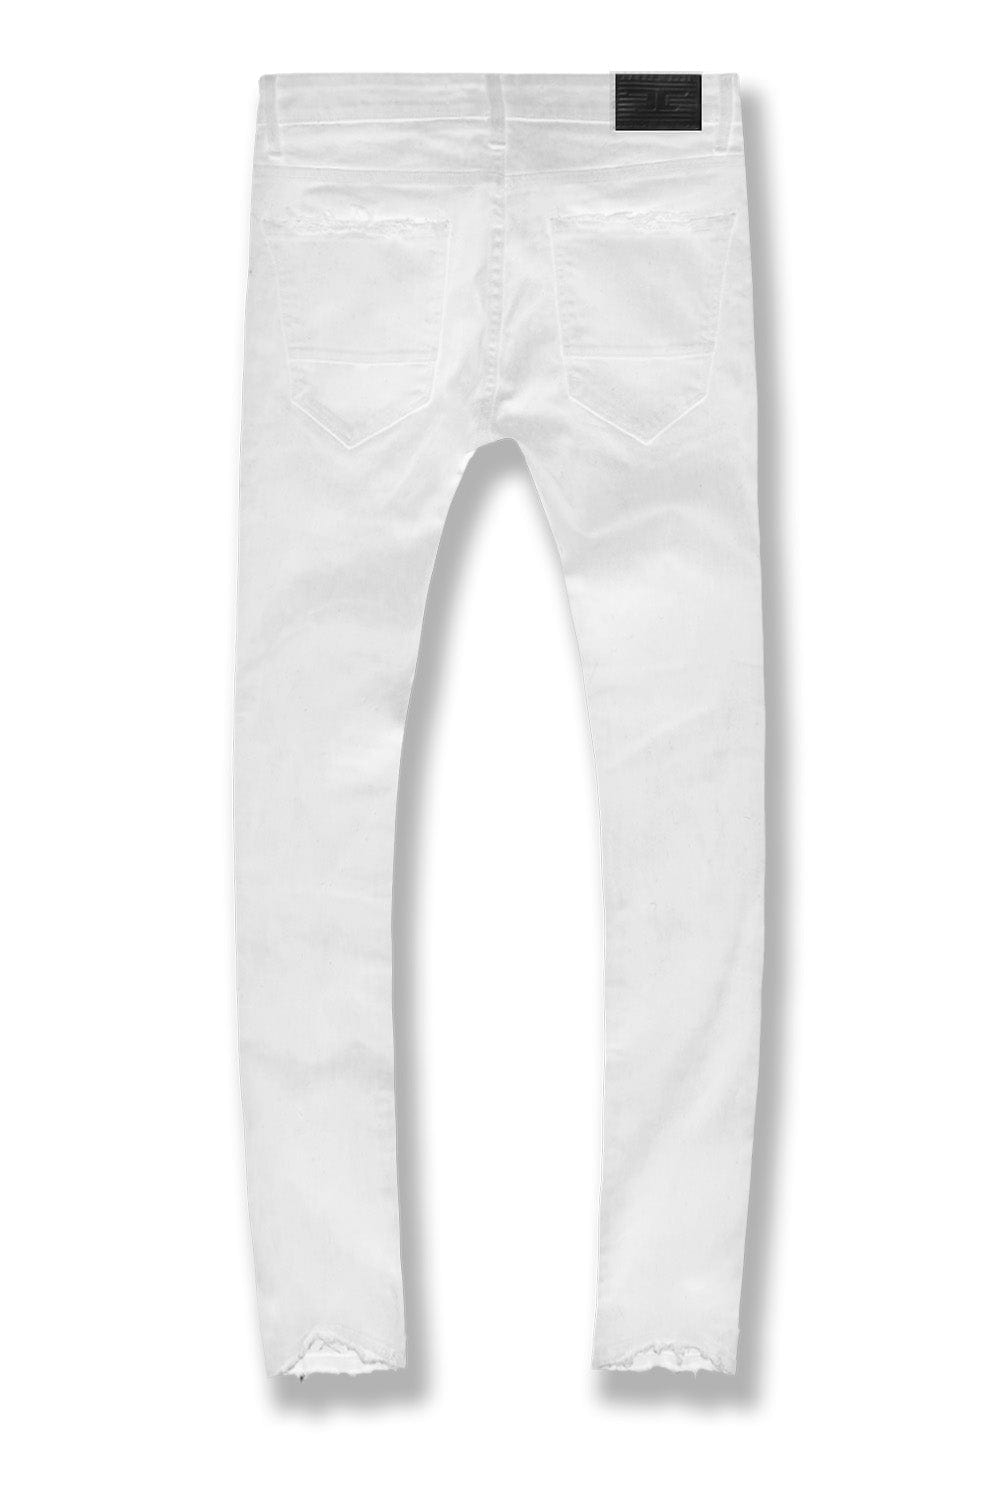 Jordan Craig Ross - Tribeca Twill Pants (White)